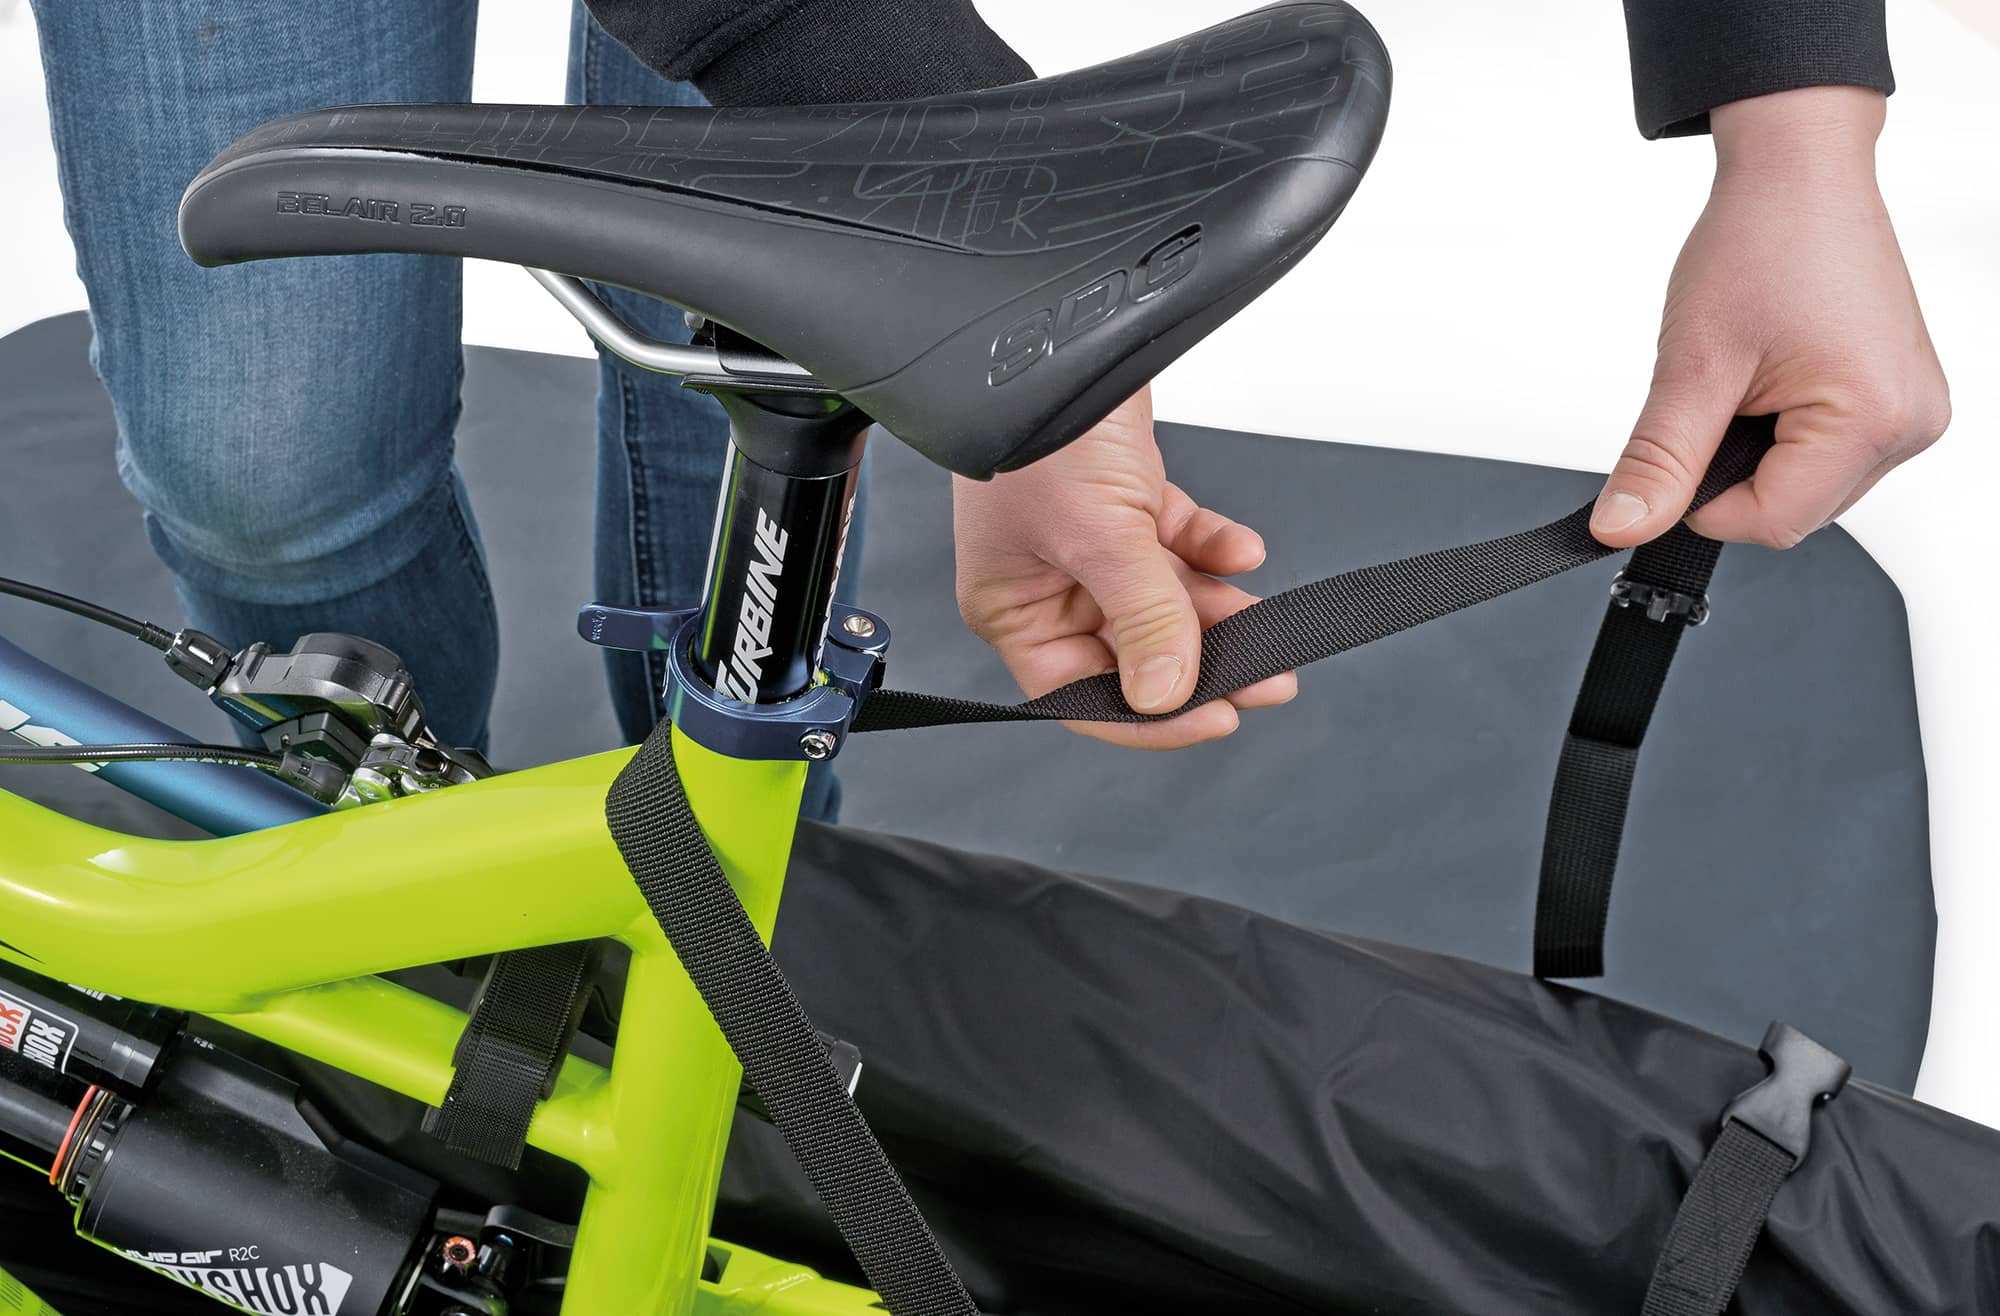 B&W bike bag 2.0 | Fahrradtasche